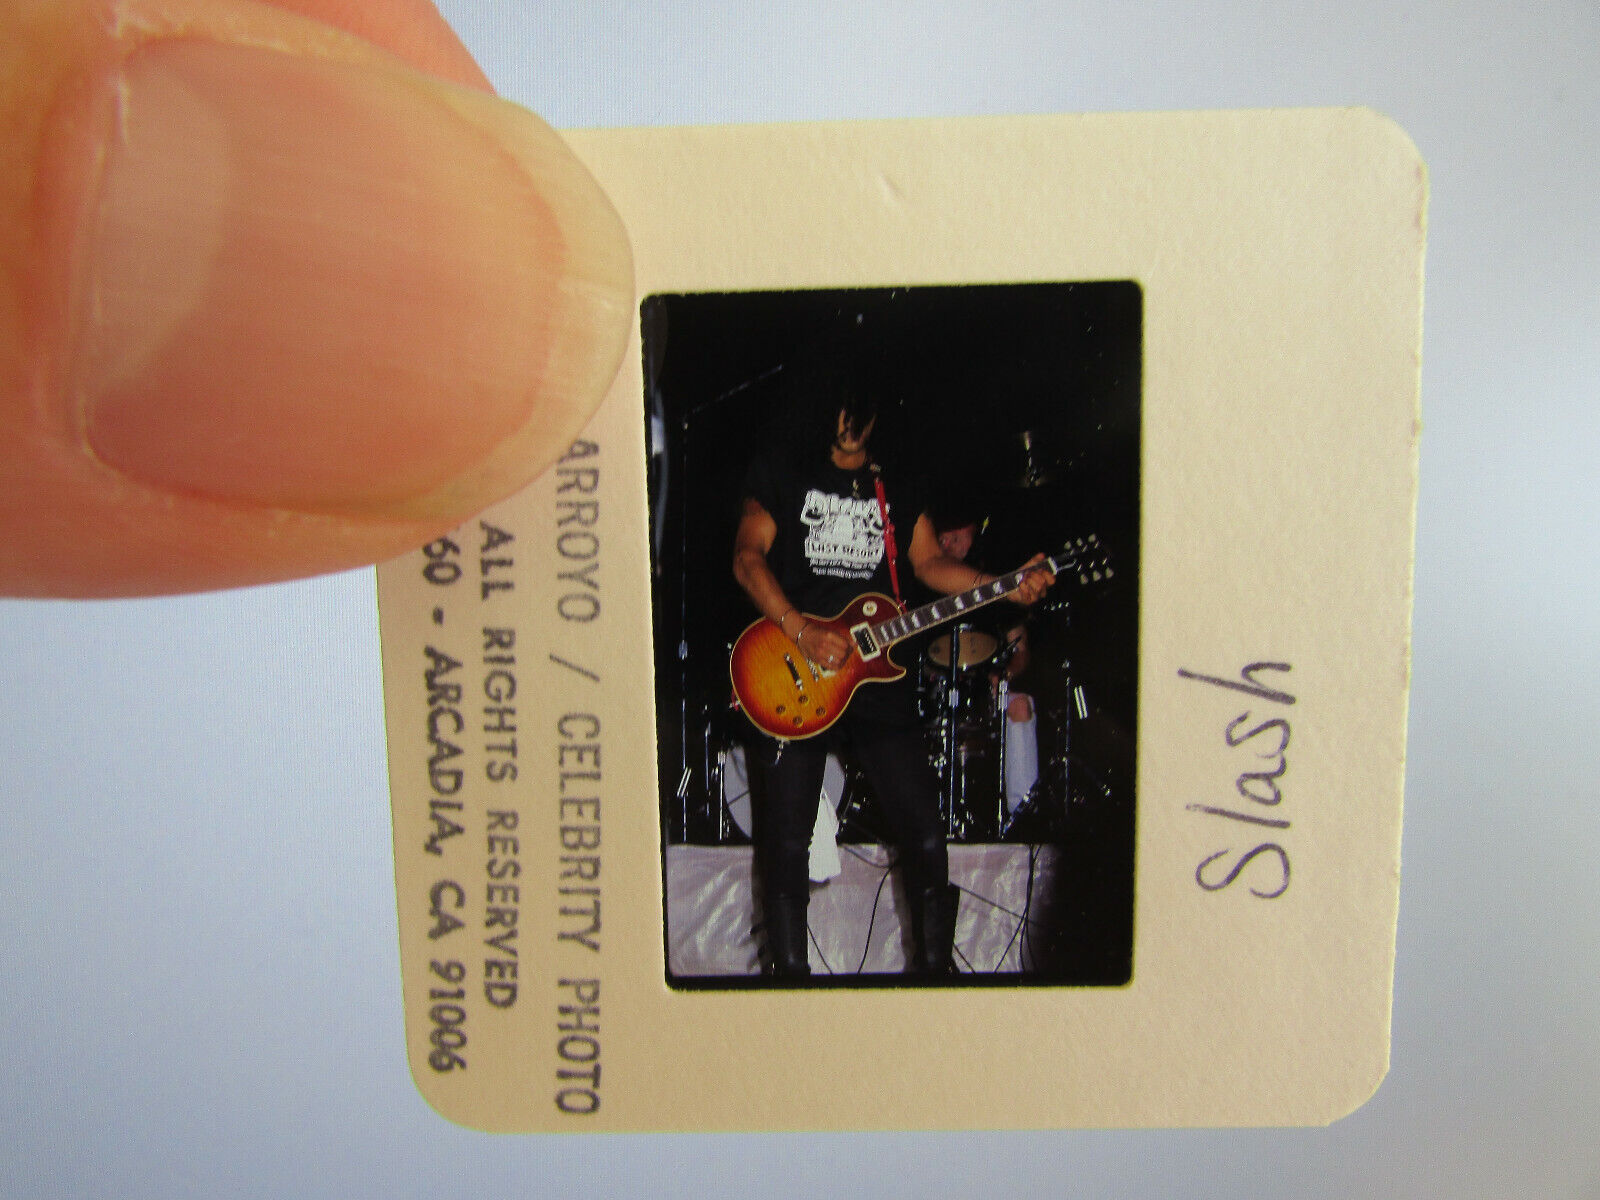 Original Press Photo Slide Negative - Guns n' Roses - Slash - 19